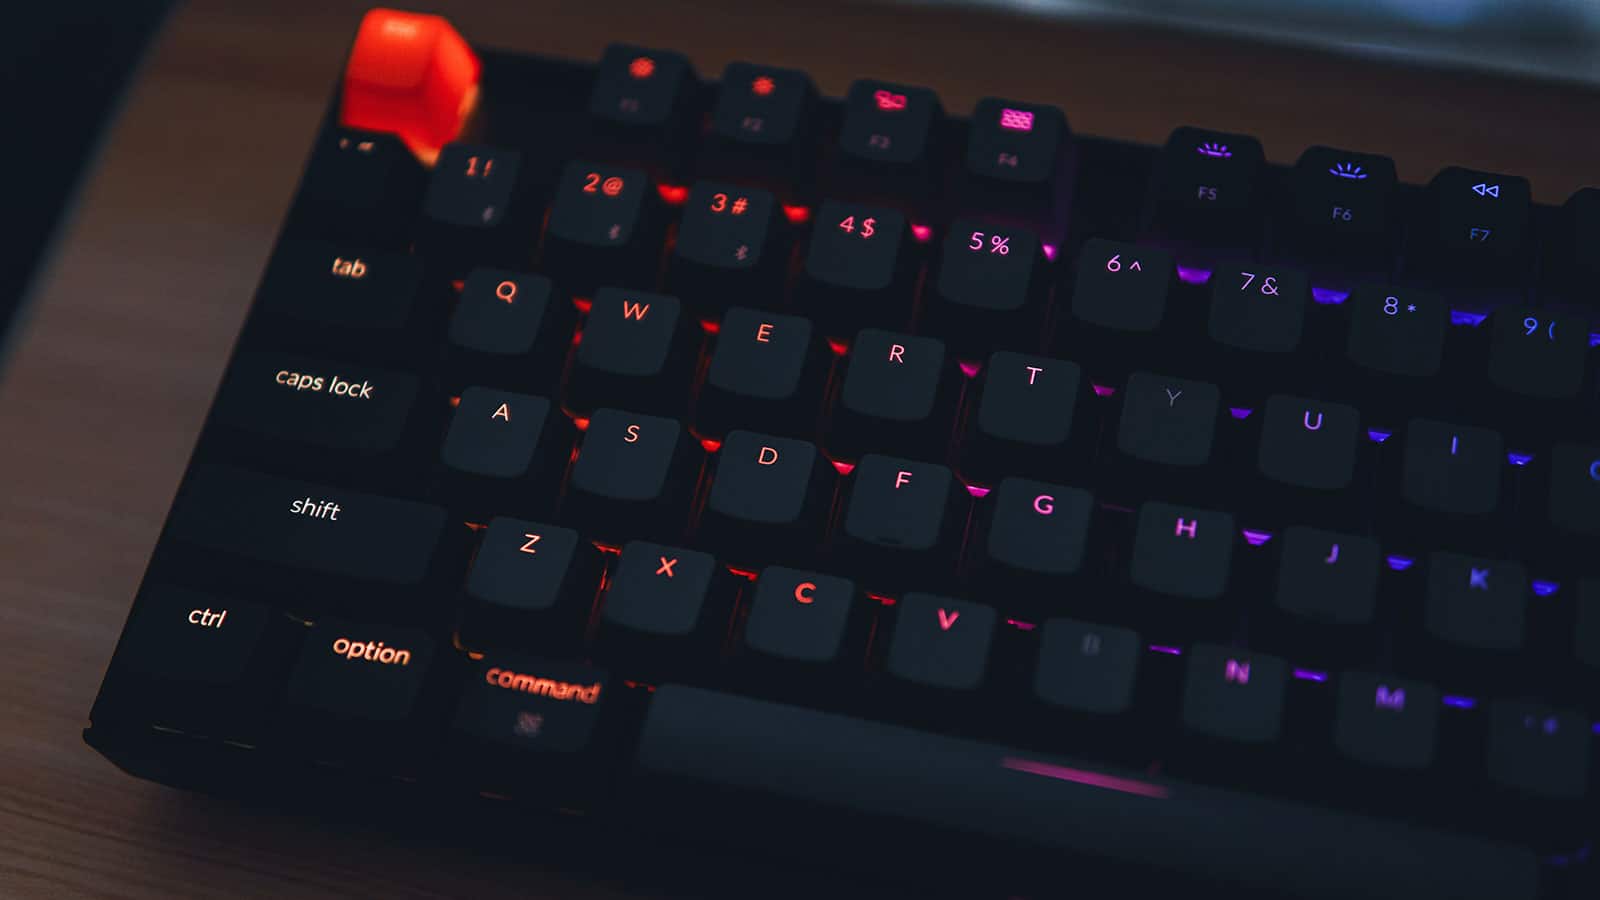 RGB gaming keyboard on wooden desk